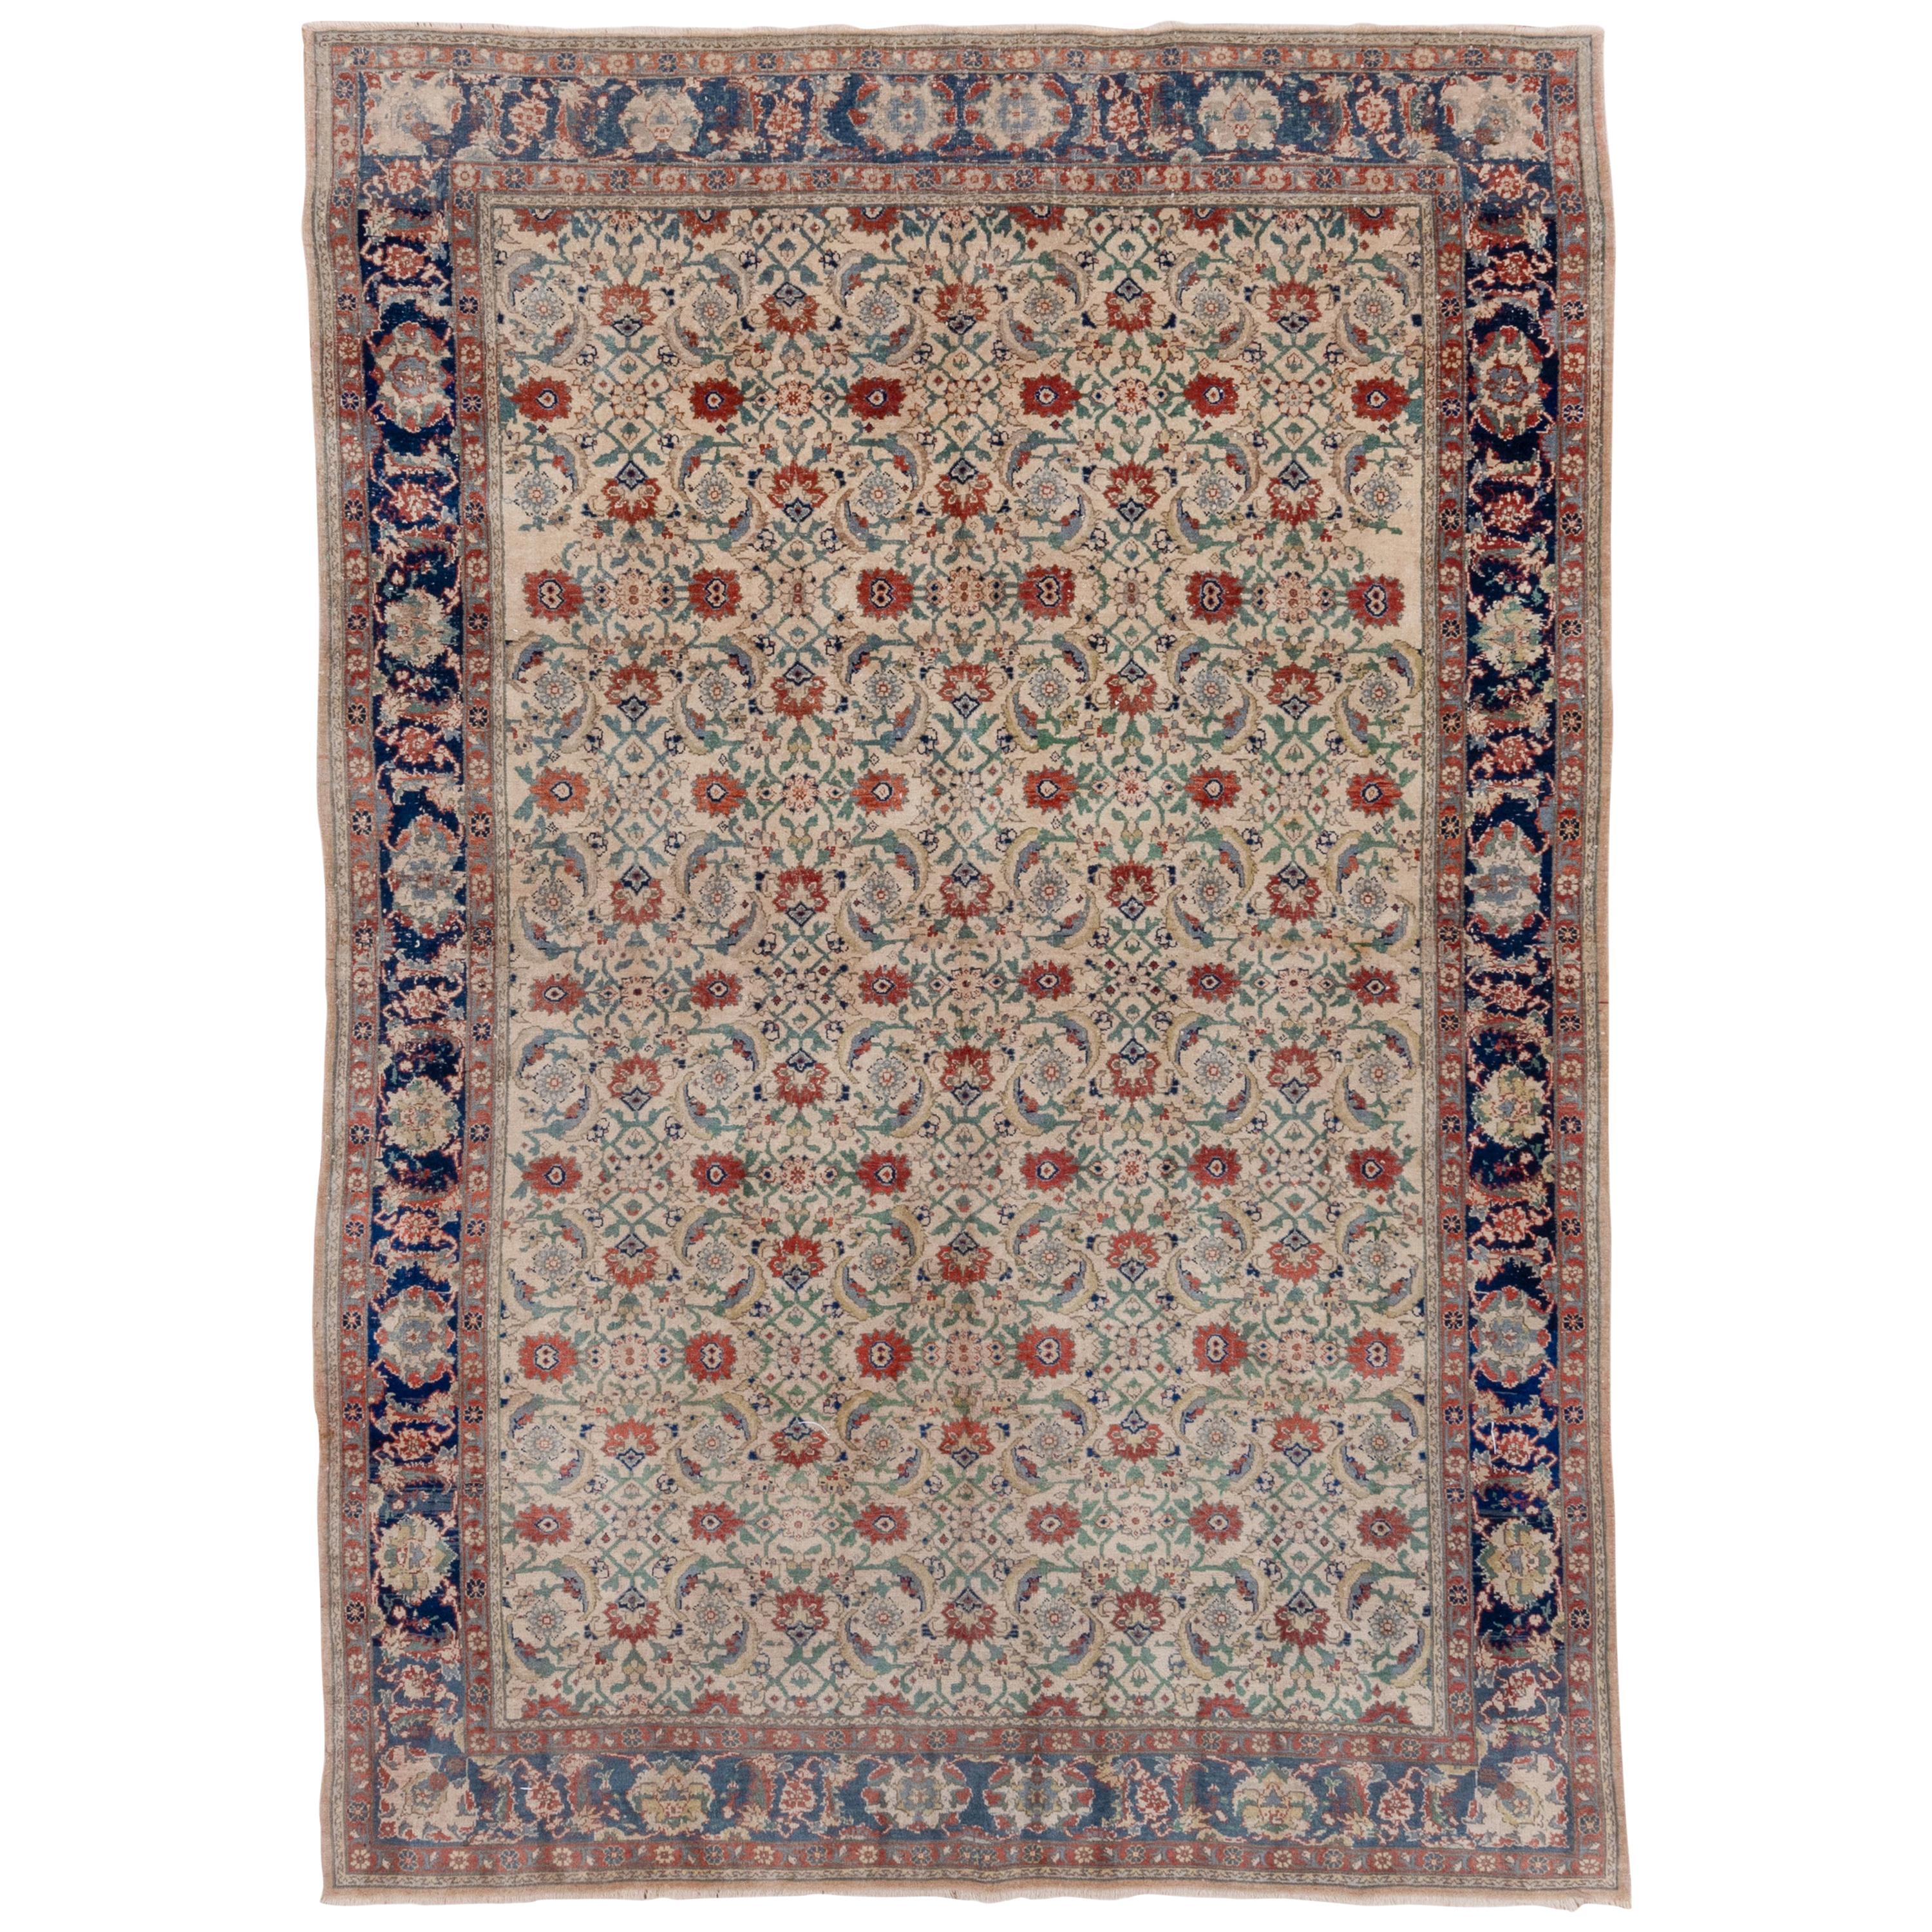 Antique Turkish Sivas Carpet, Traditional Palette, Cream Field, Great Colors